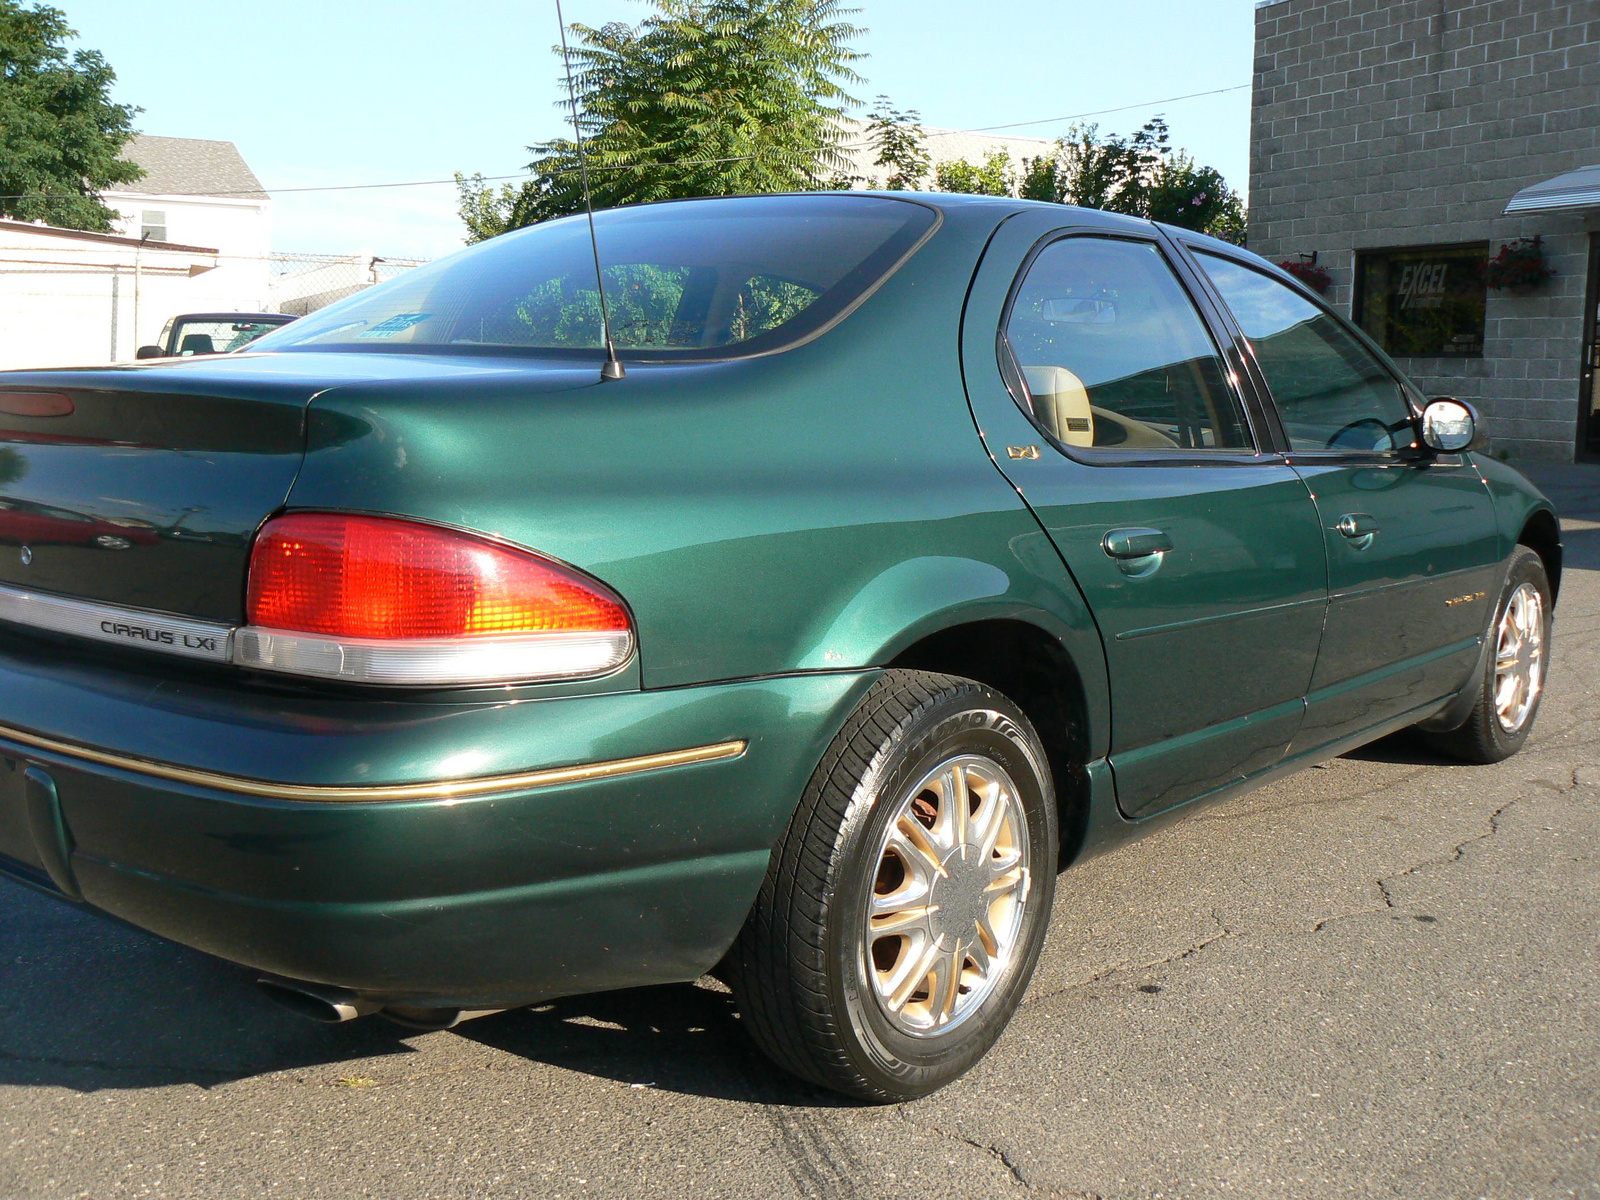 1998 Chrysler cirrus lxi problems